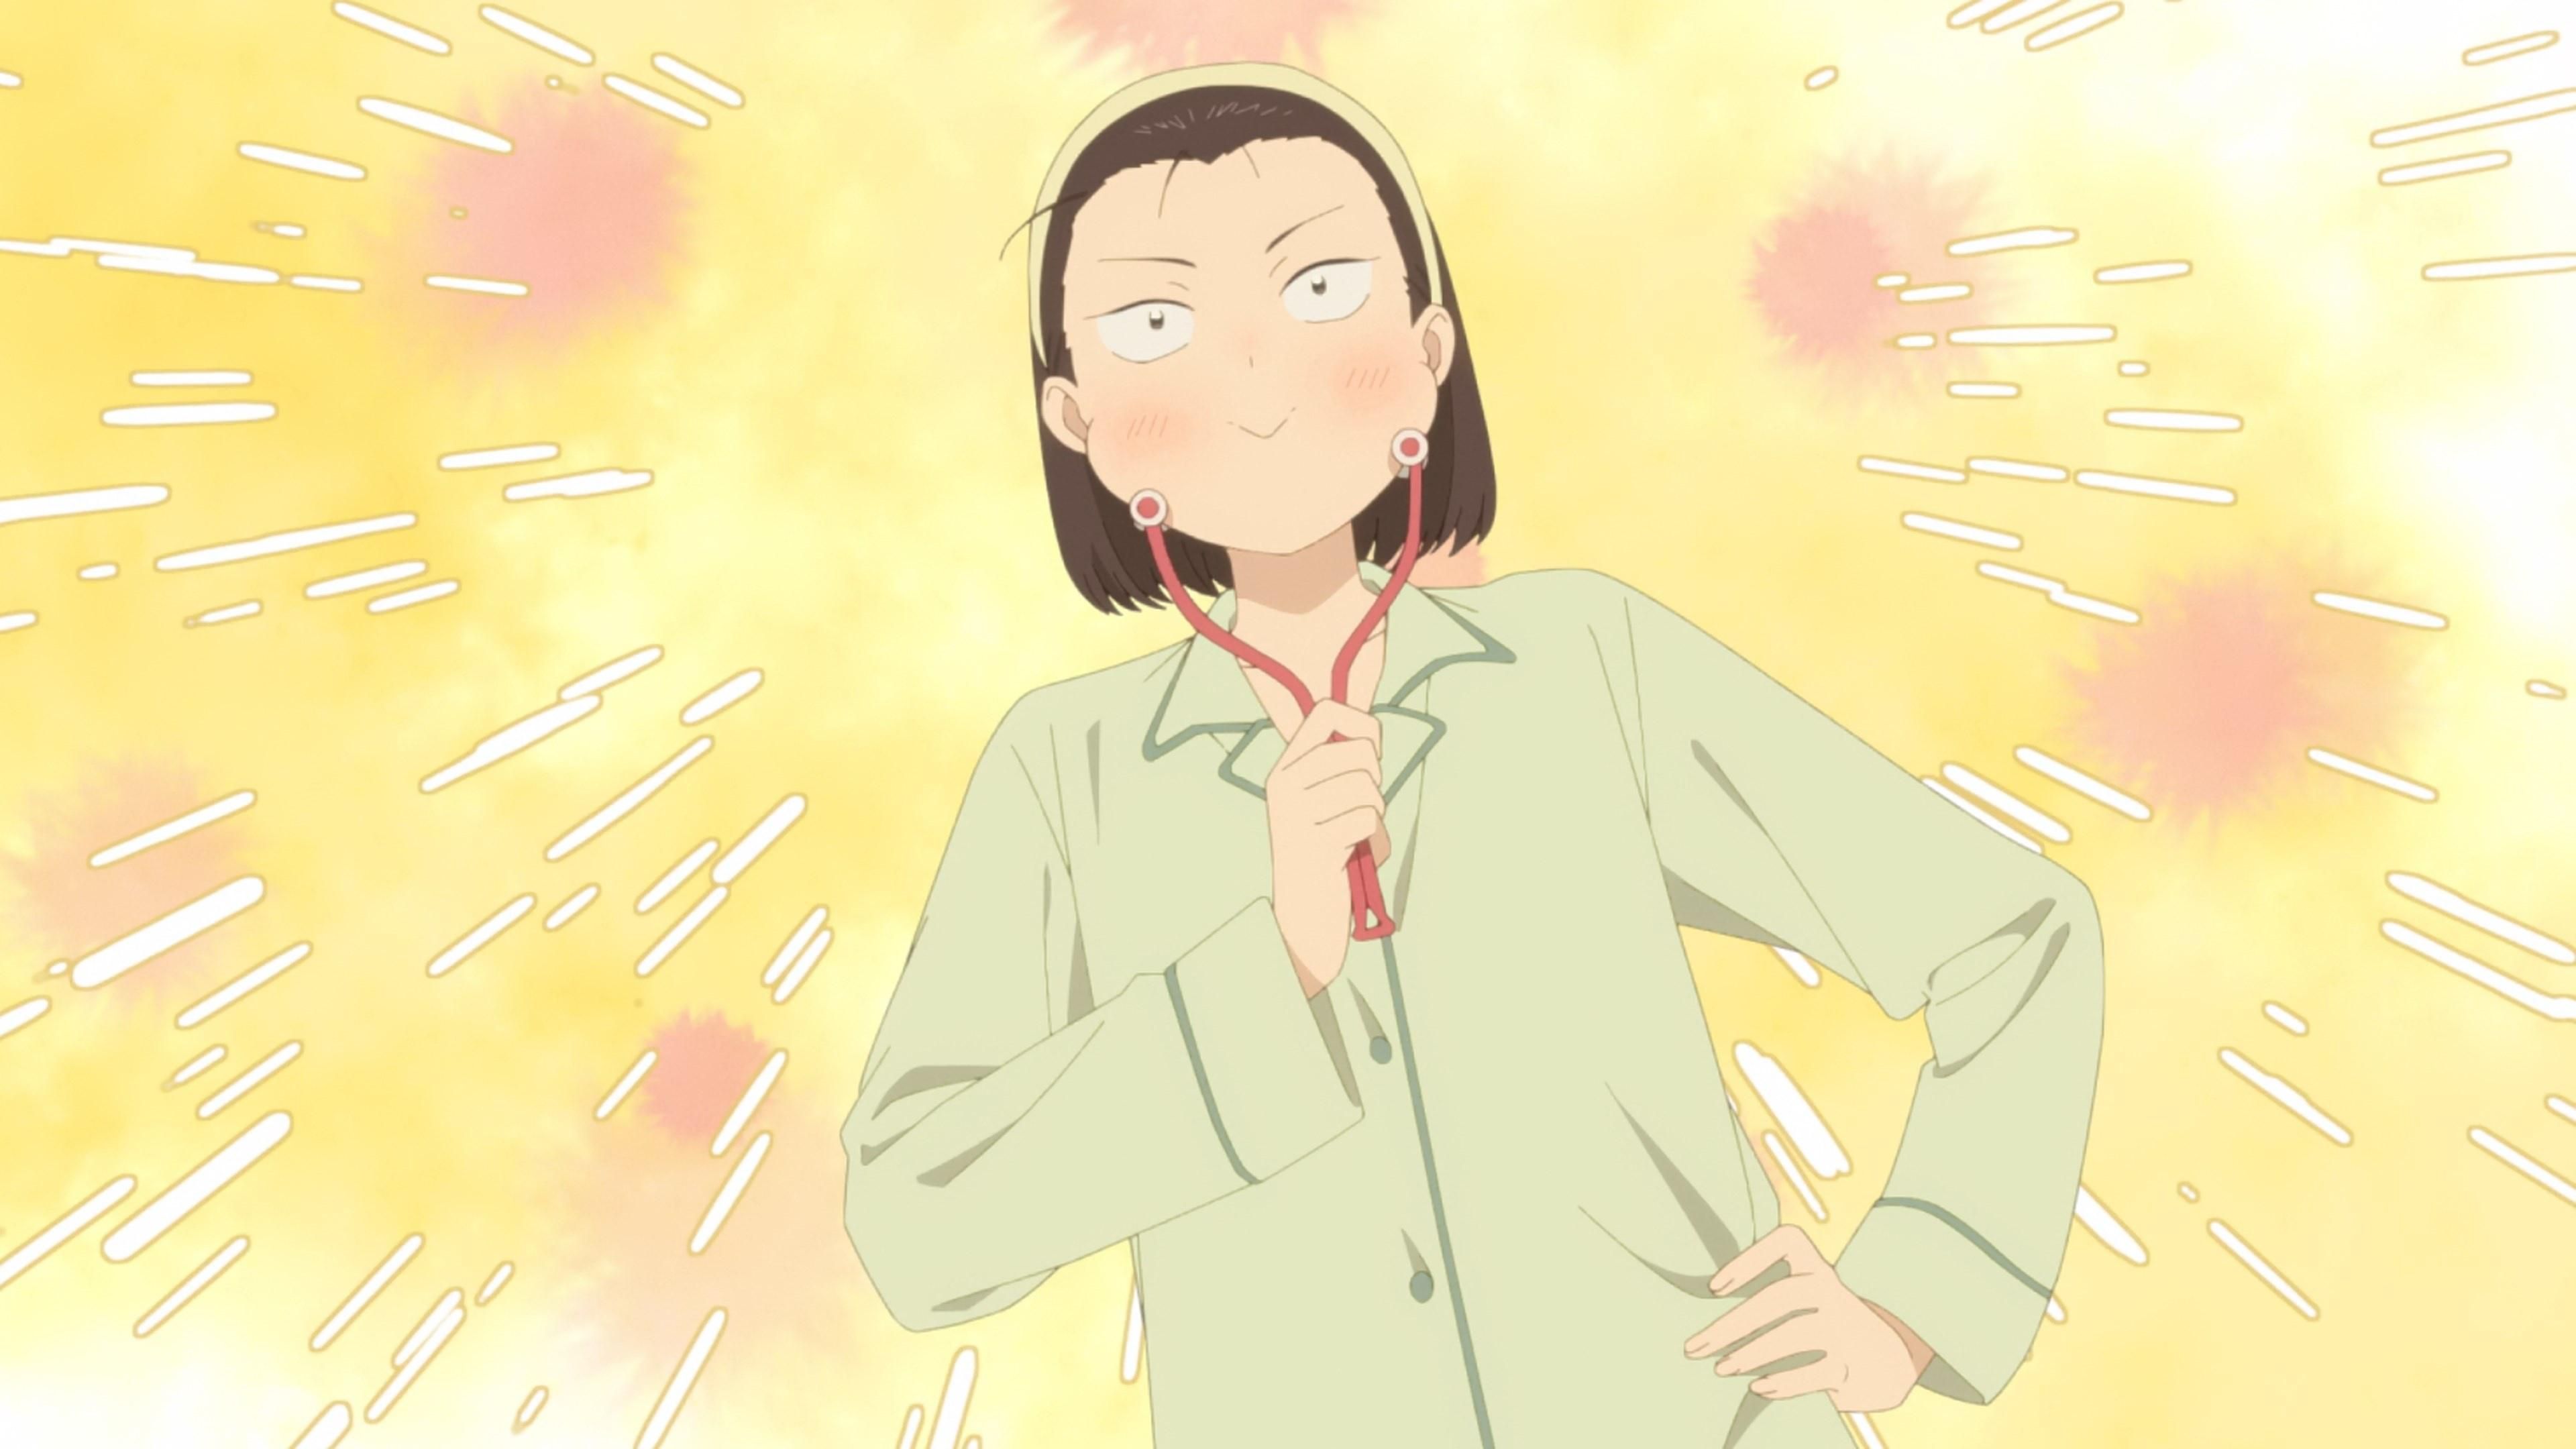 Manga Skip to Loafer Gets TV Anime Adaptation  MyAnimeListnet